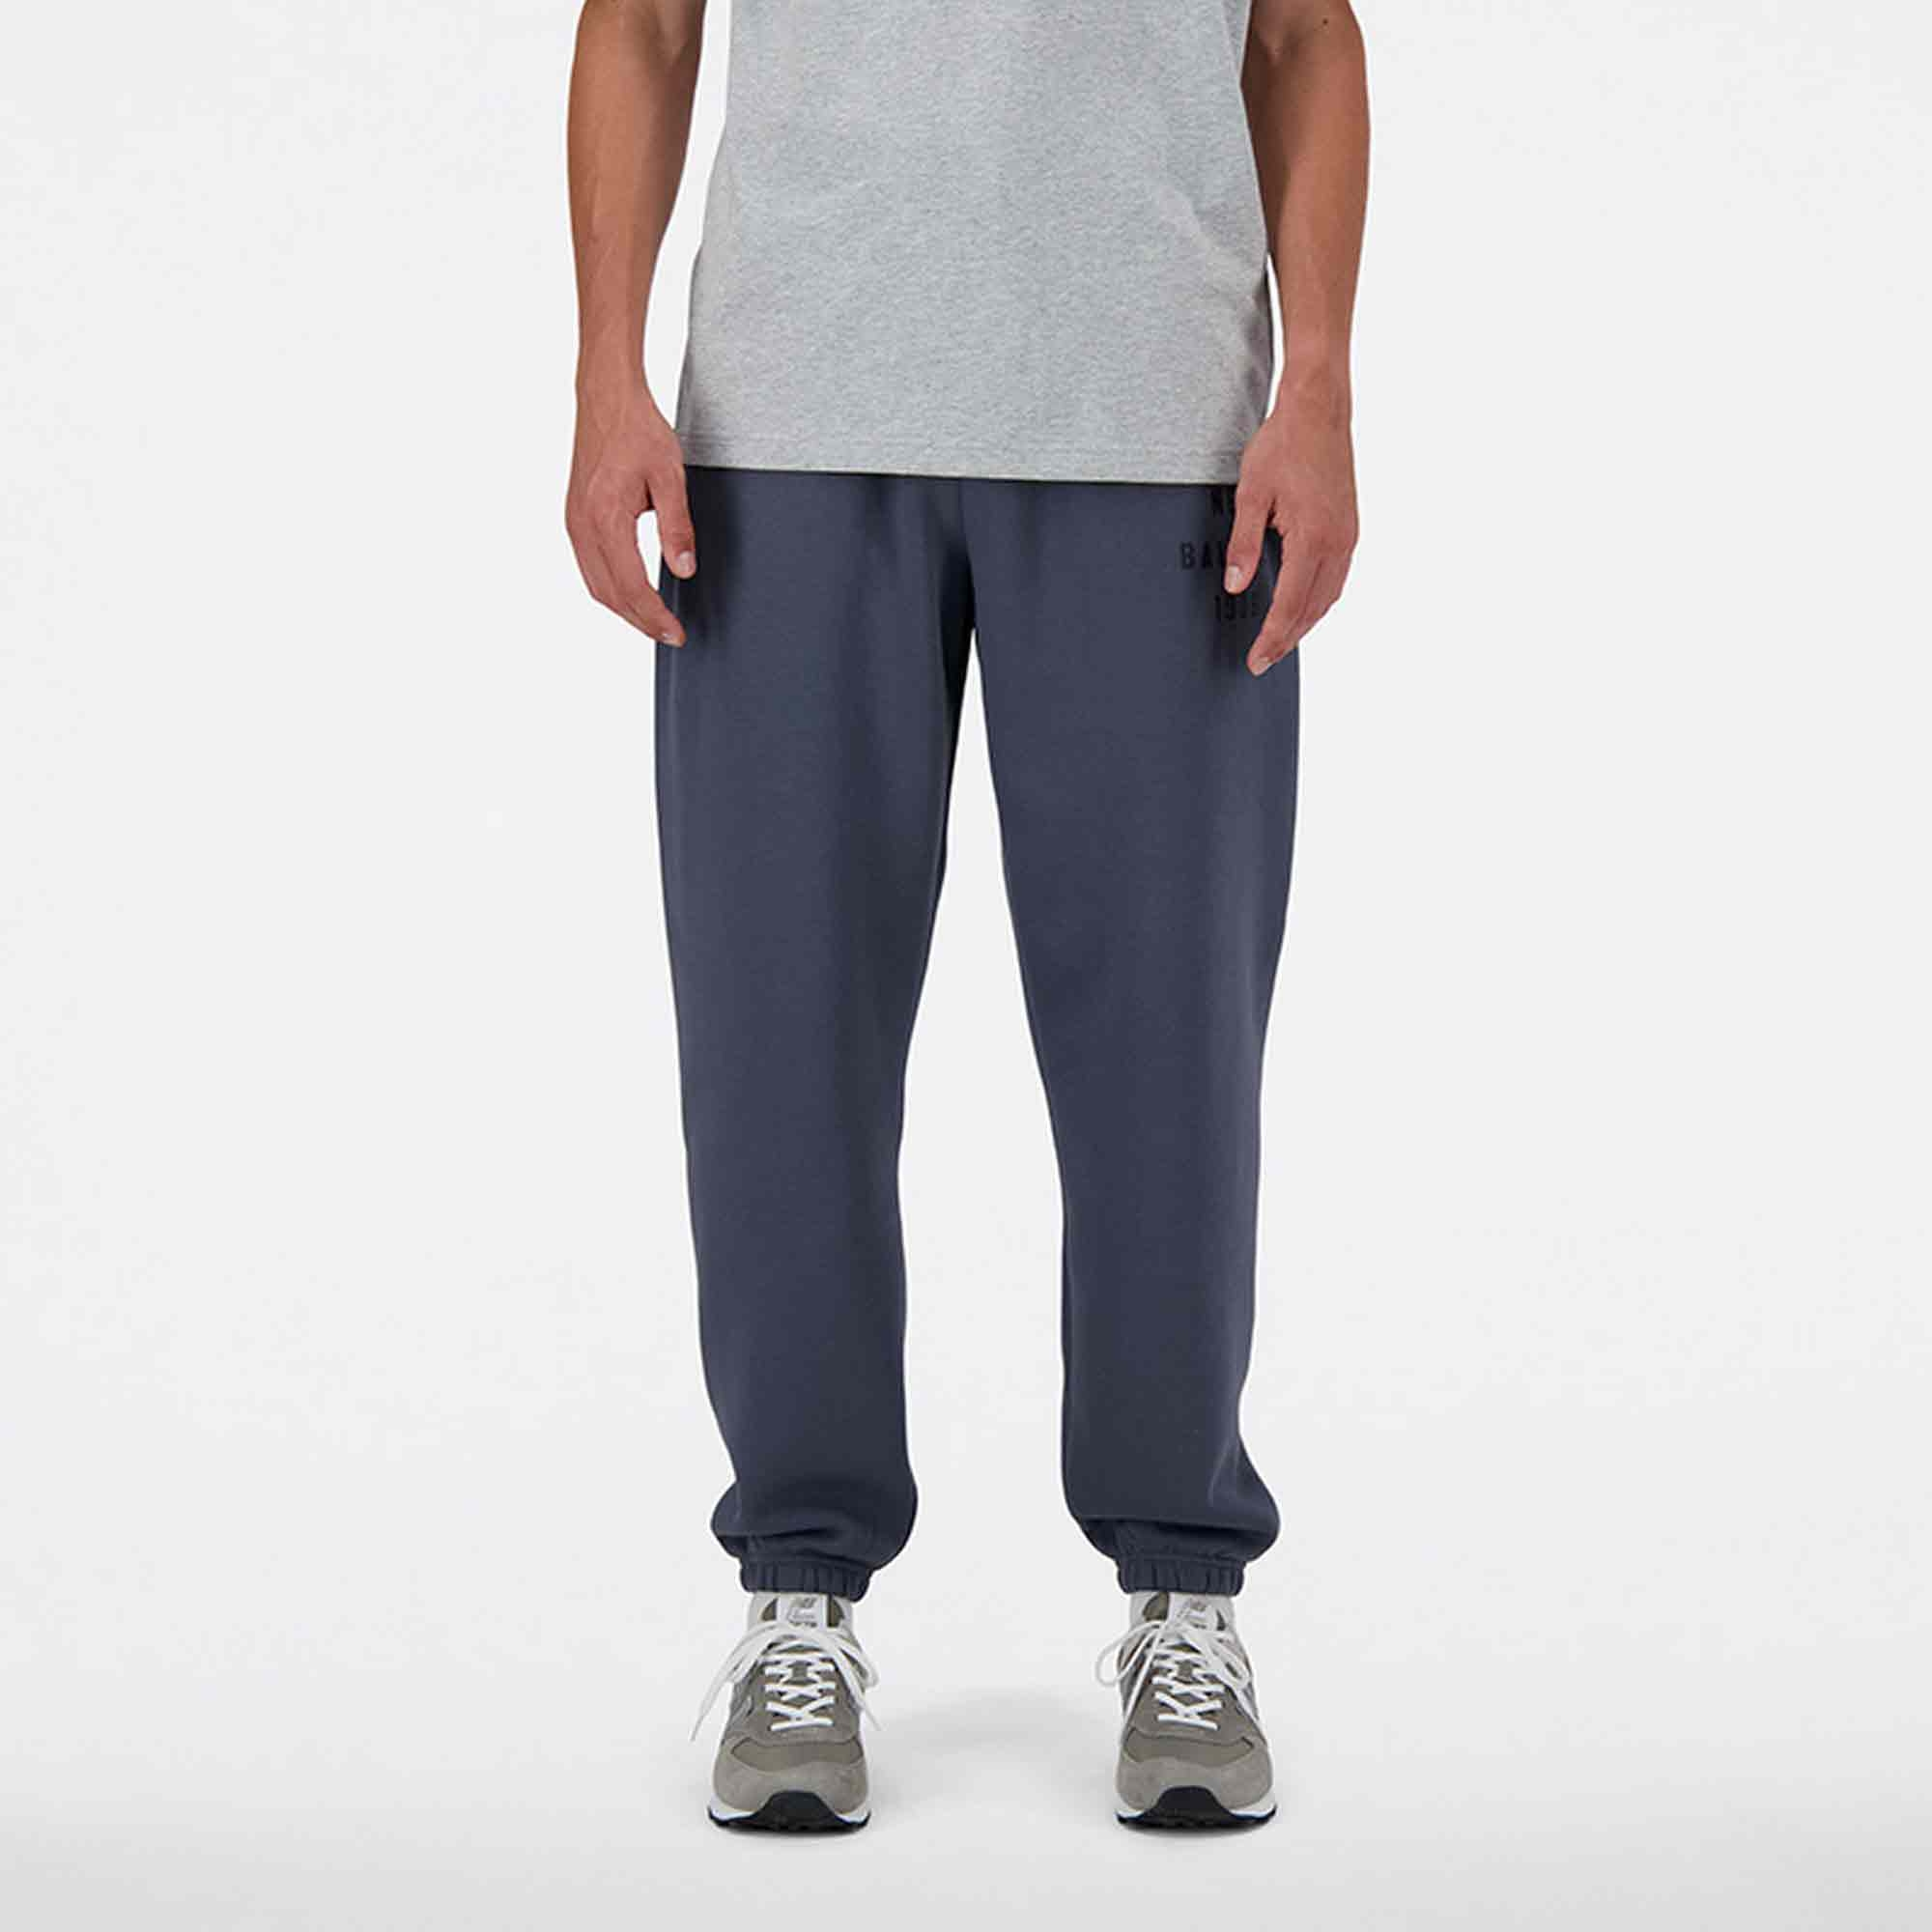 New Balance Mens Graphic Fleece Pant